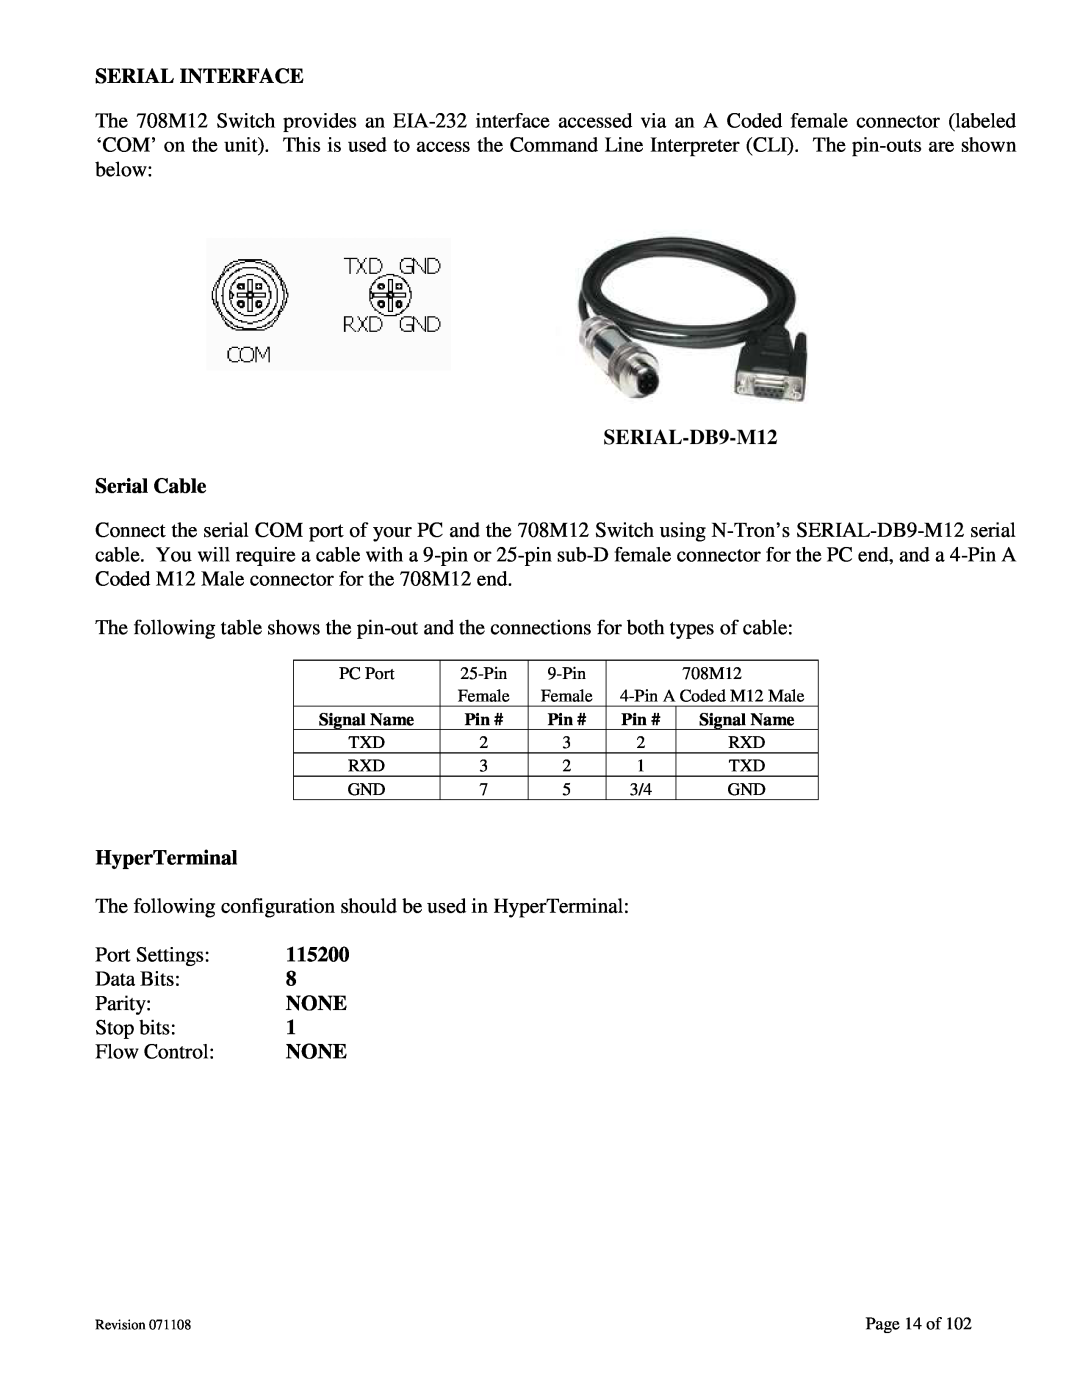 N-Tron 708M12 user manual Serial Interface, SERIAL-DB9-M12 Serial Cable, HyperTerminal, 115200, None 